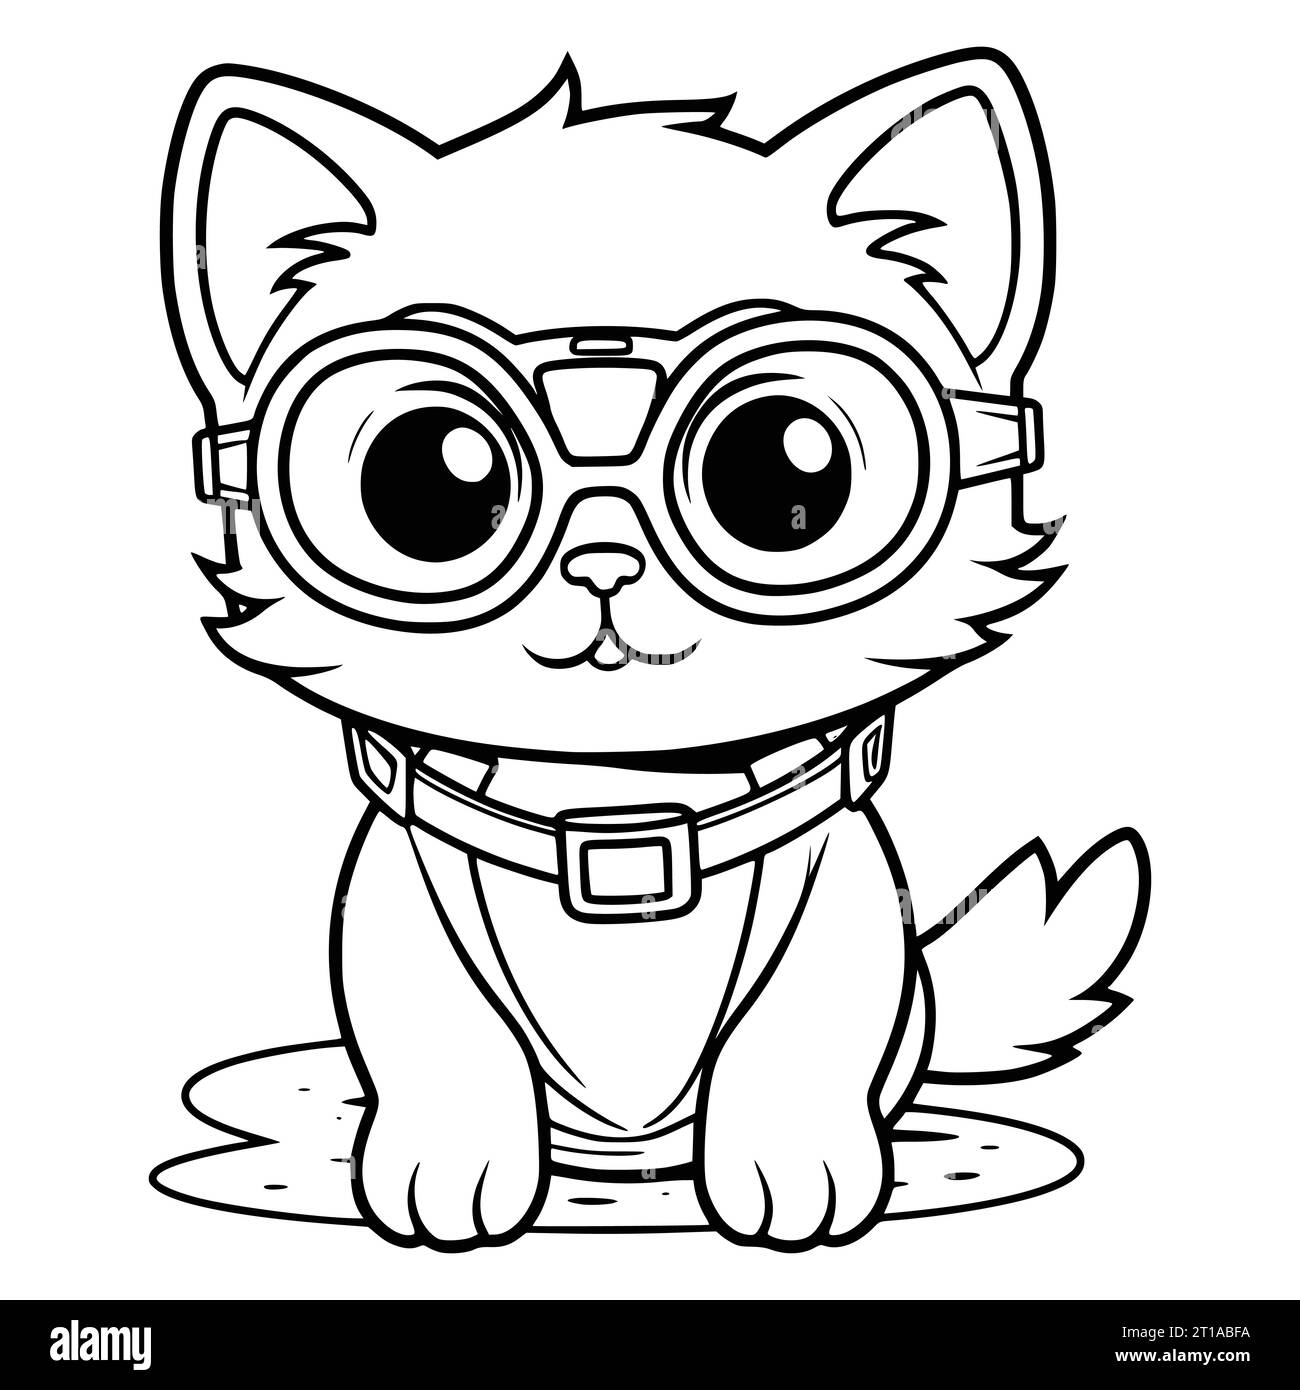 Cute cat coloring pages printable hi